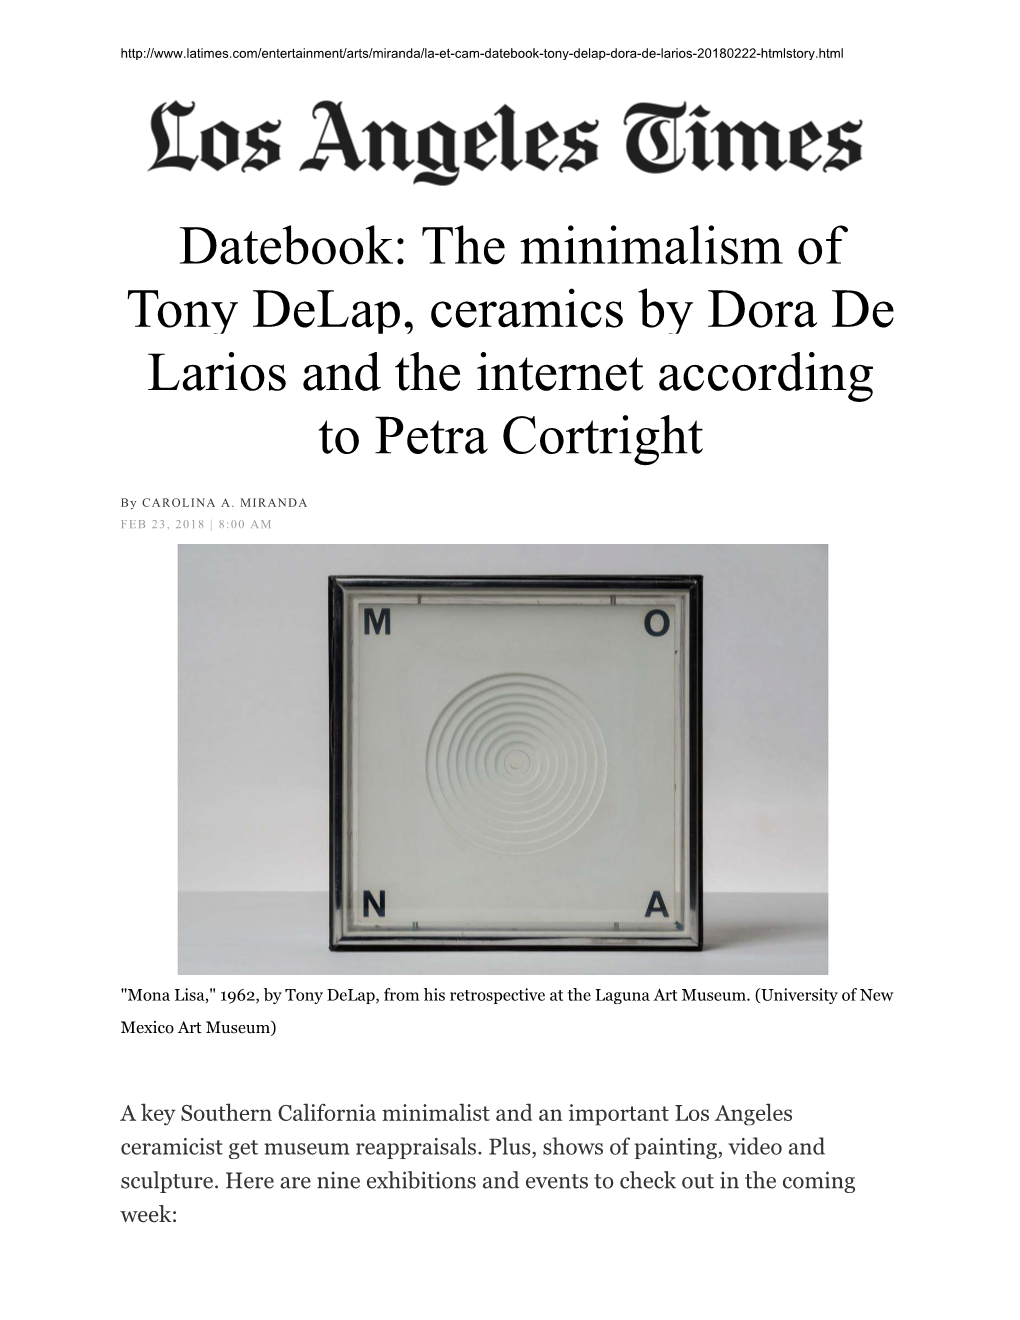 Datebook: the Minimalism of Tony Delap, Ceramics by Dora De Larios and the Internet According to Petra Cortright